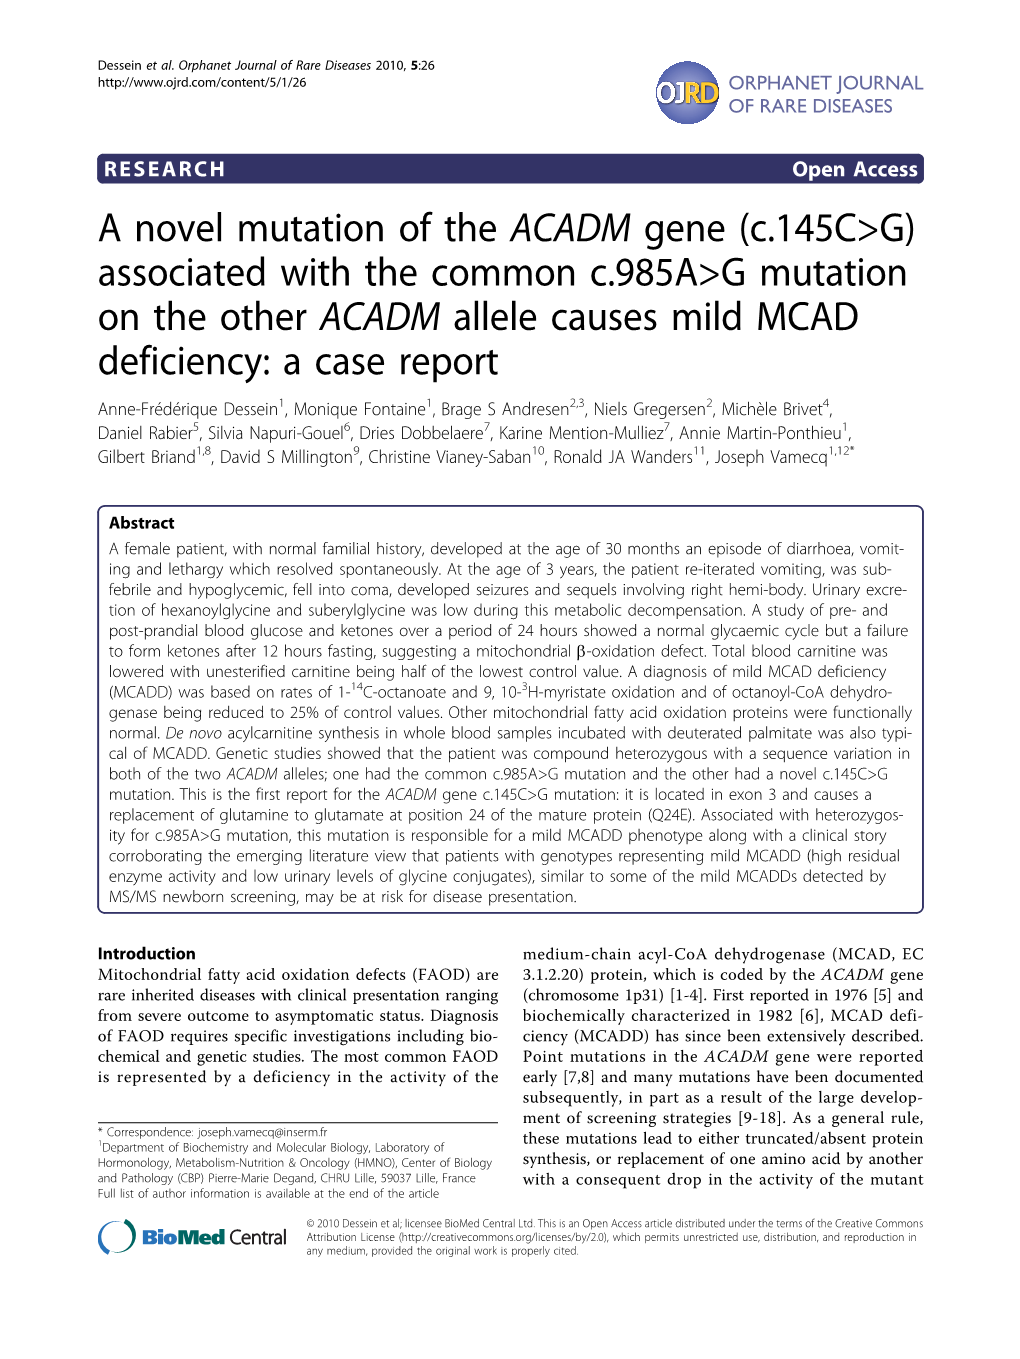 A Novel Mutation of the ACADM Gene